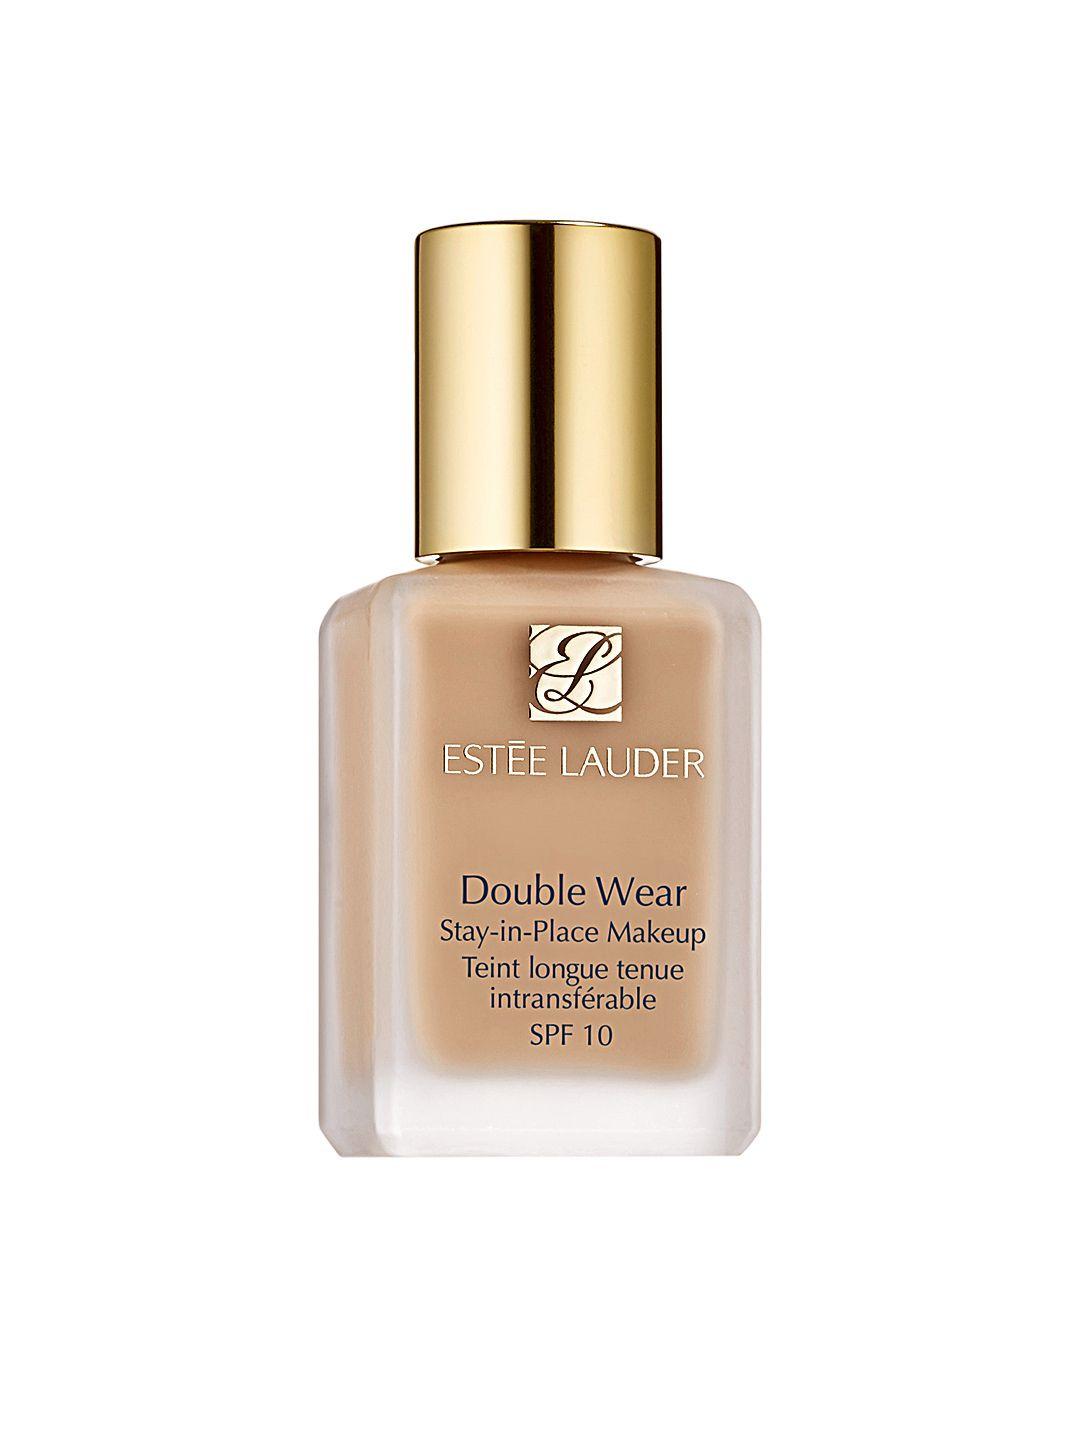 estee lauder double wear makeup foundation with spf 10 - desert beige 2n1 30ml